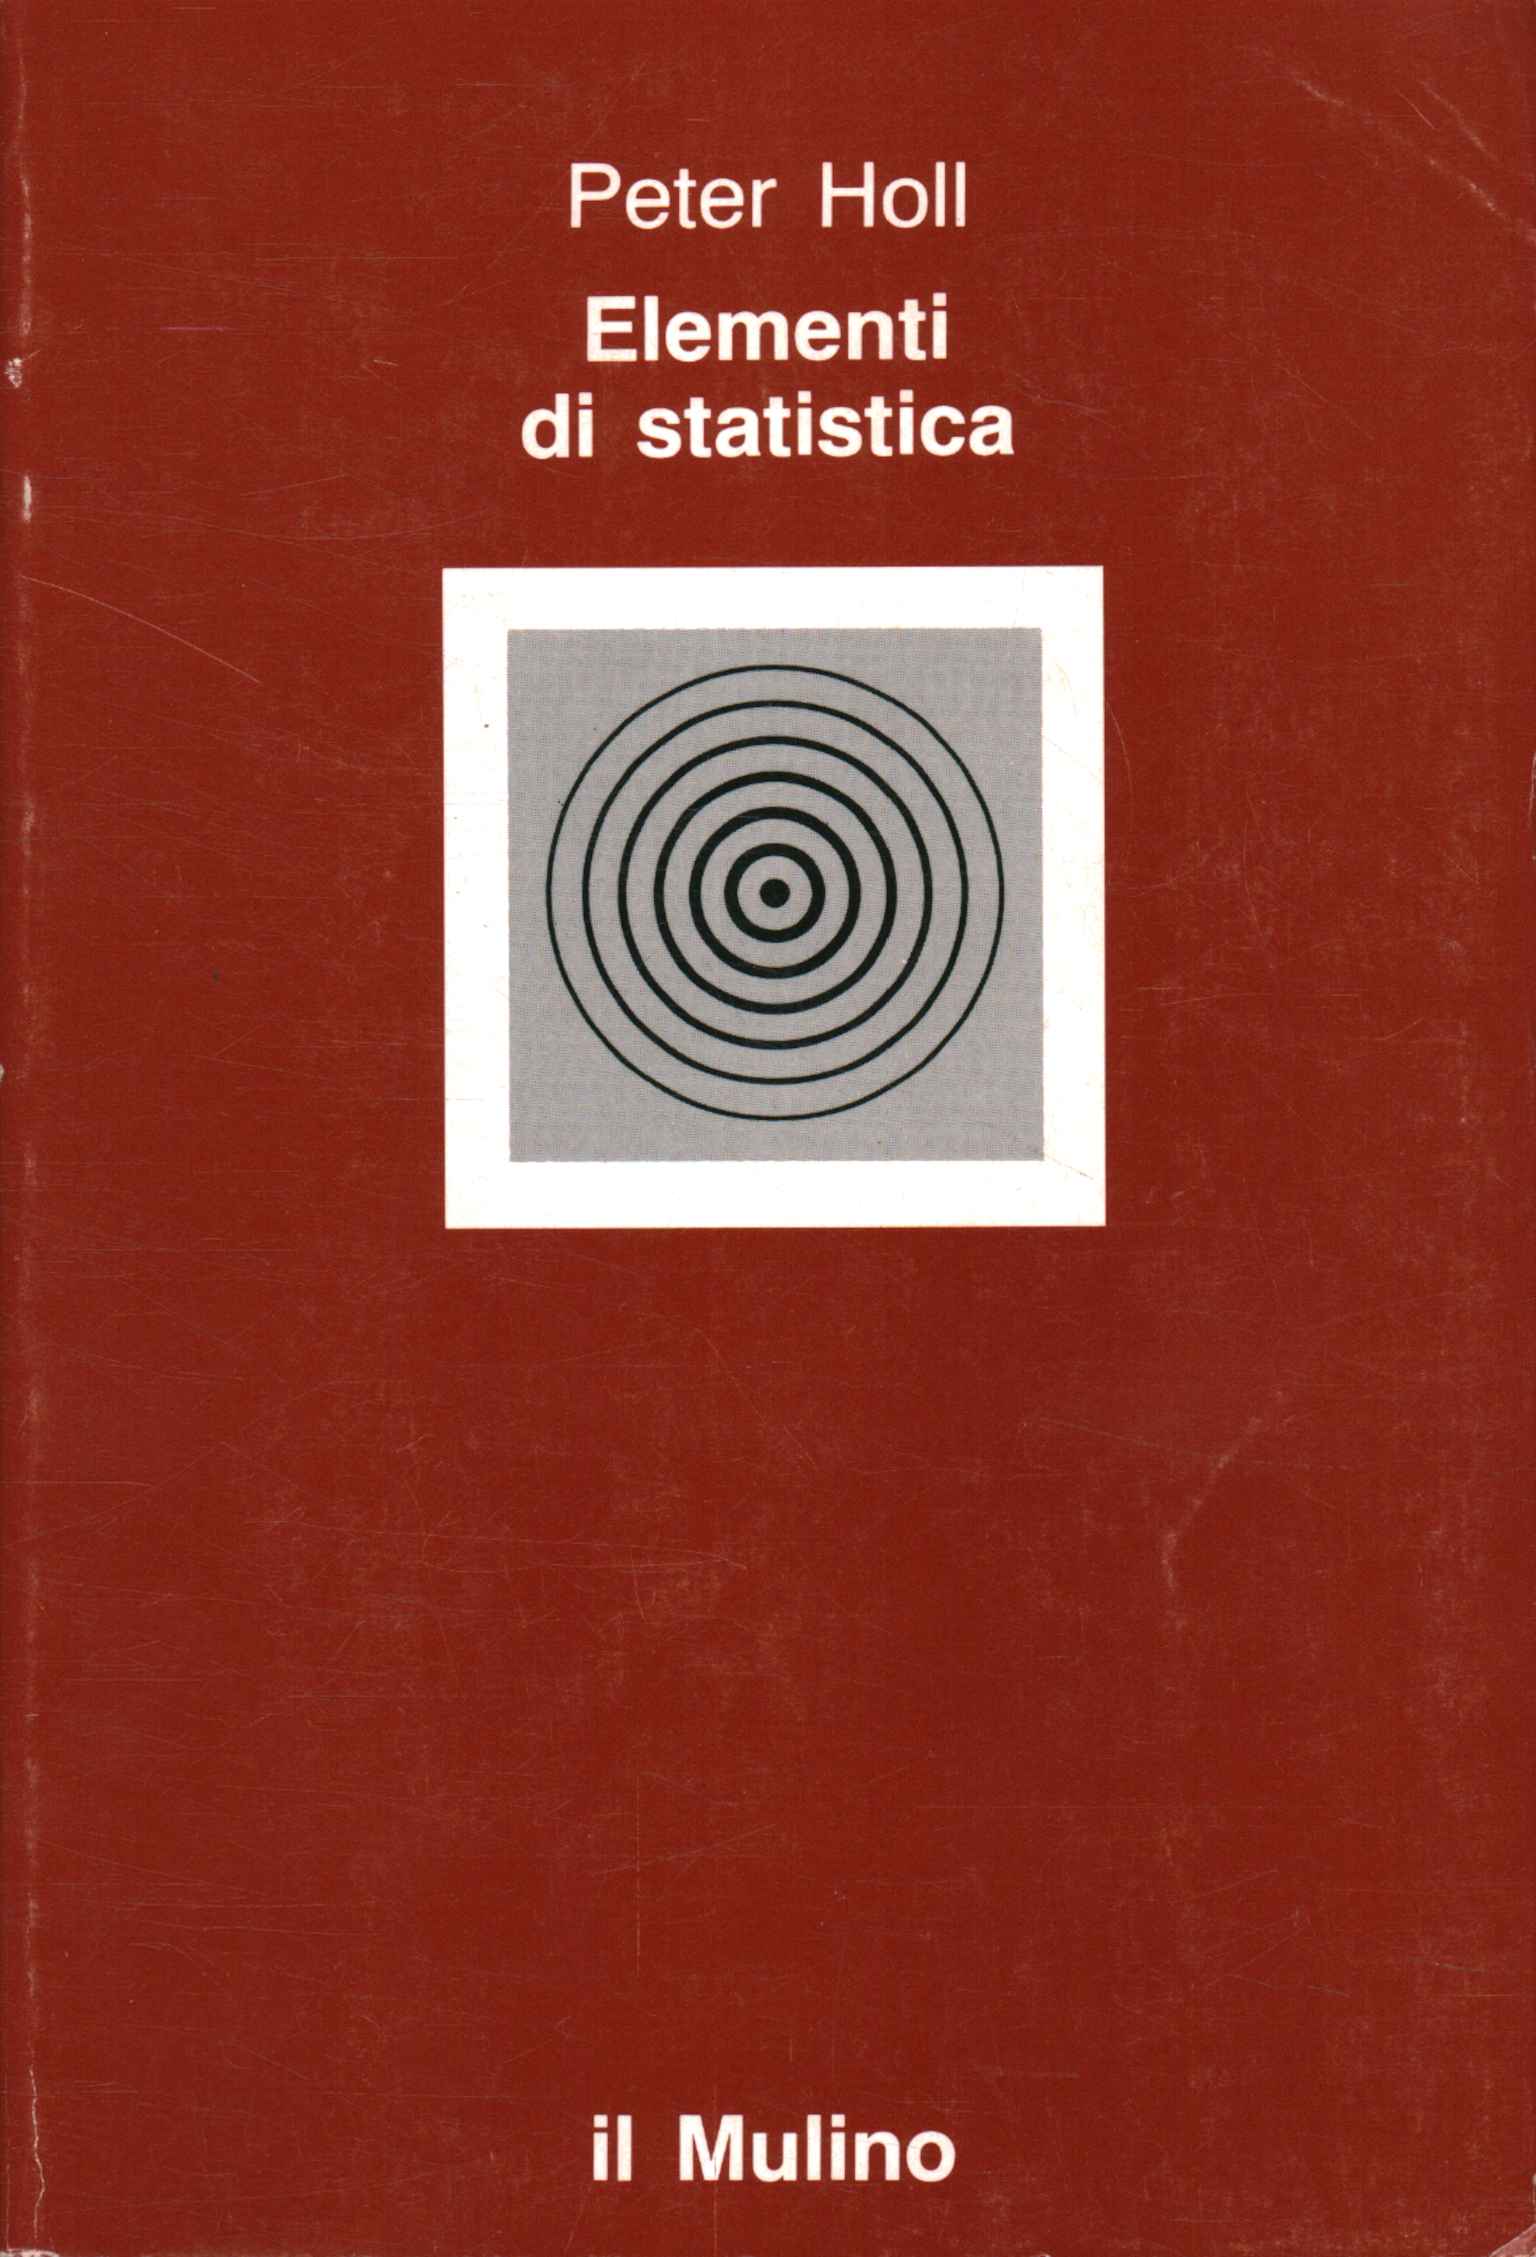 Elements of statistics